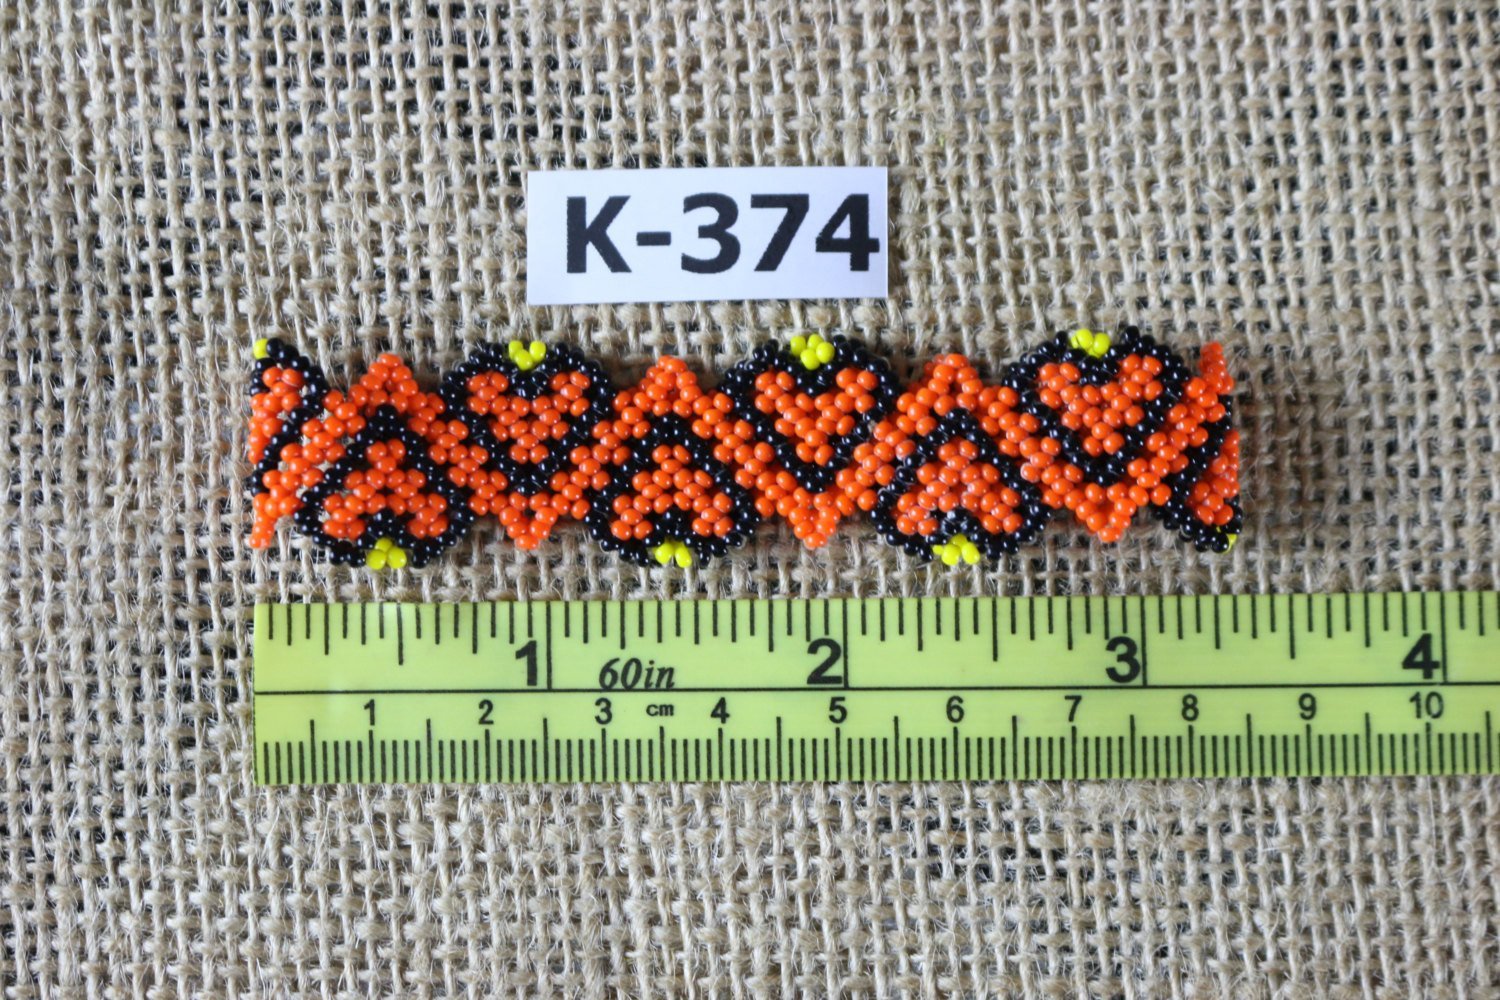 3-Color Tribal Style Cuff Bracelet Peyote or Brick Beading Pattern